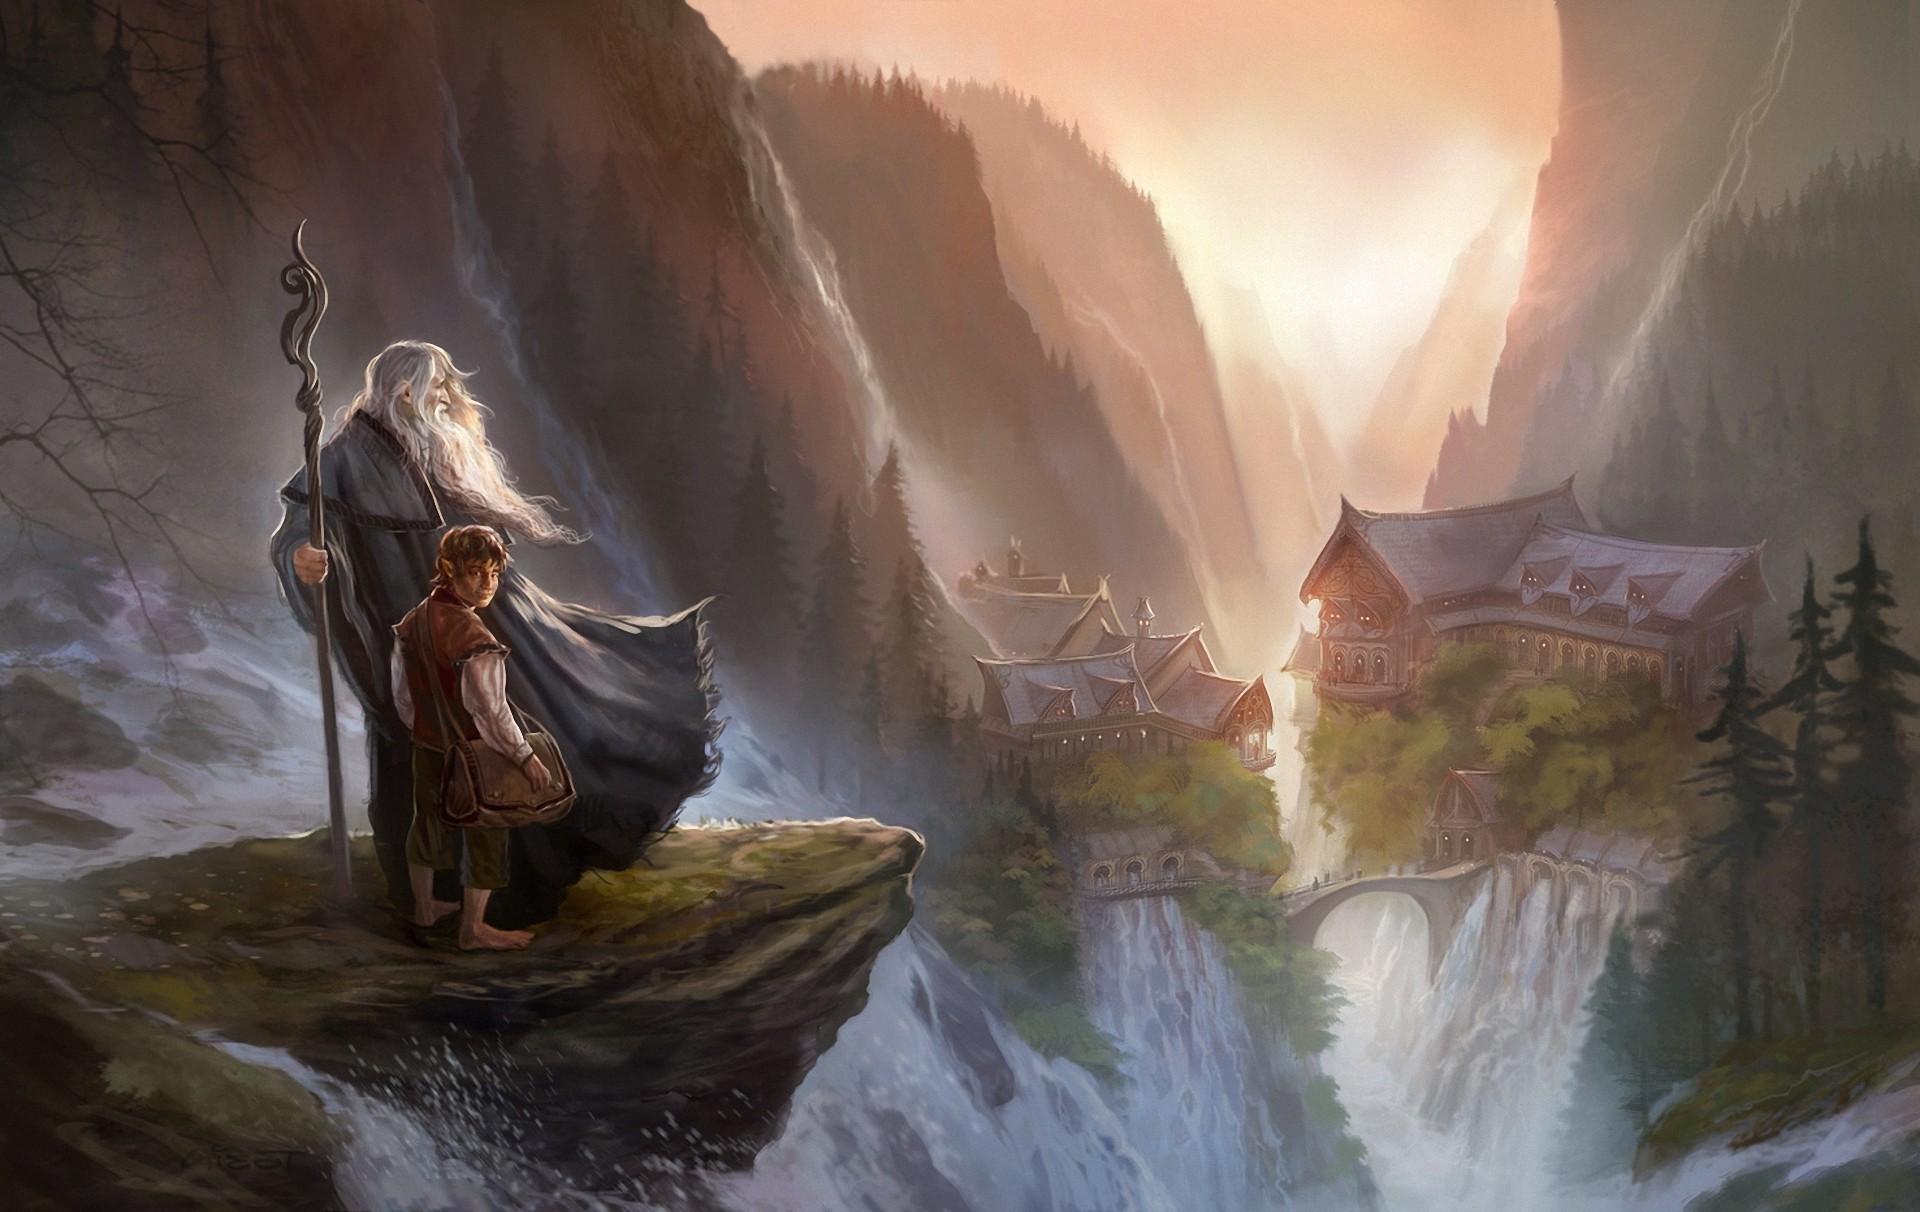 fantasy Art, Digital Art, The Lord Of The Rings, The Hobbit, Gandalf